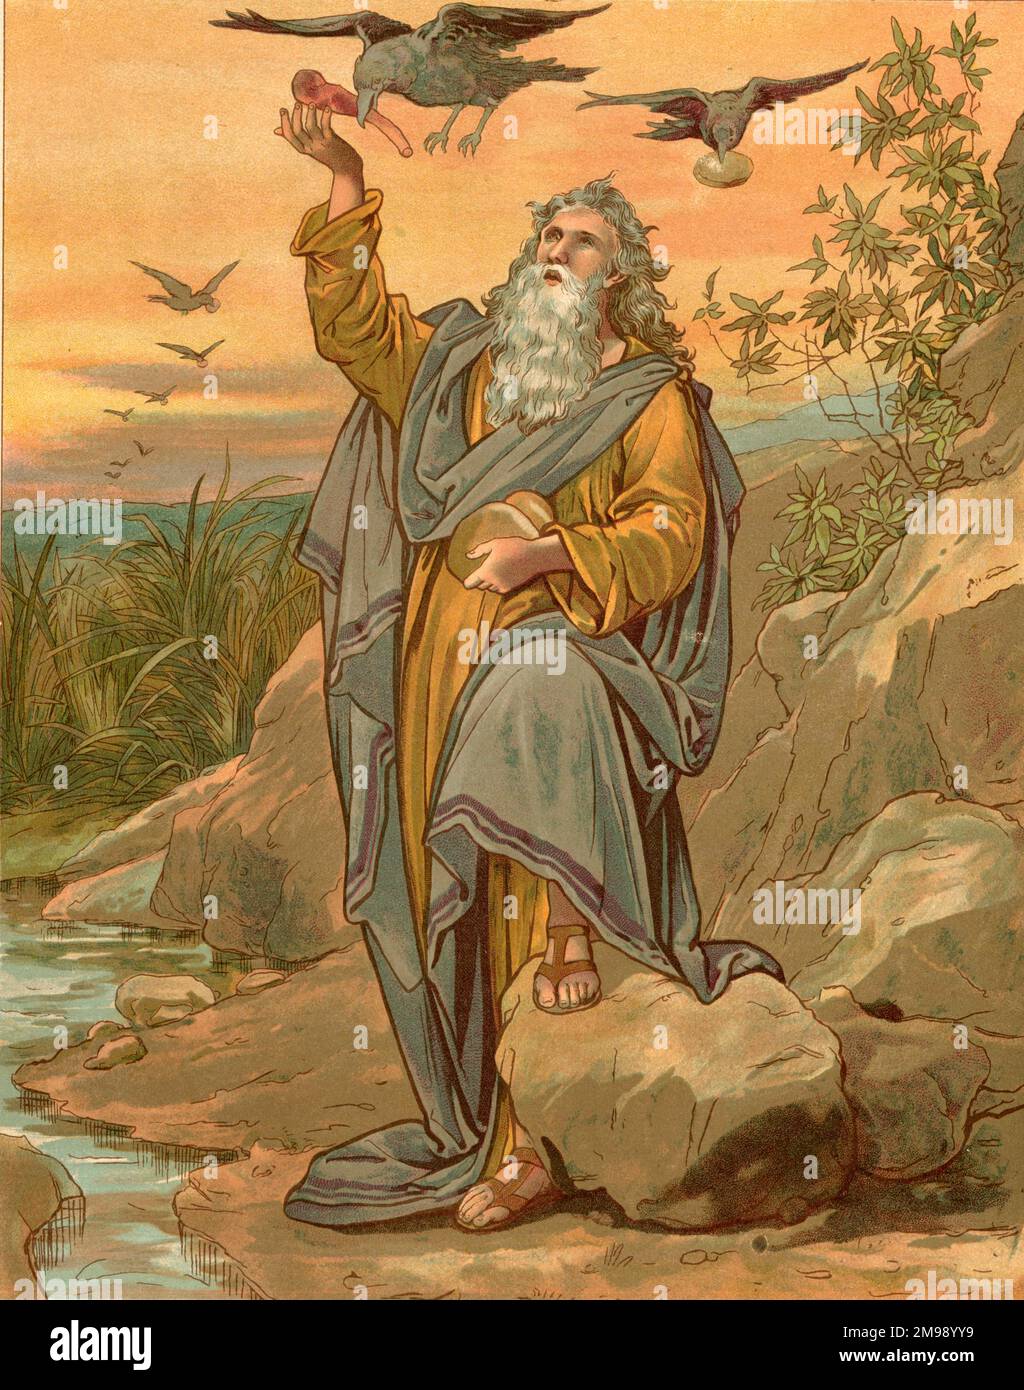 Biblical Tales by John Lawson, the prophet Elijah. Stock Photo